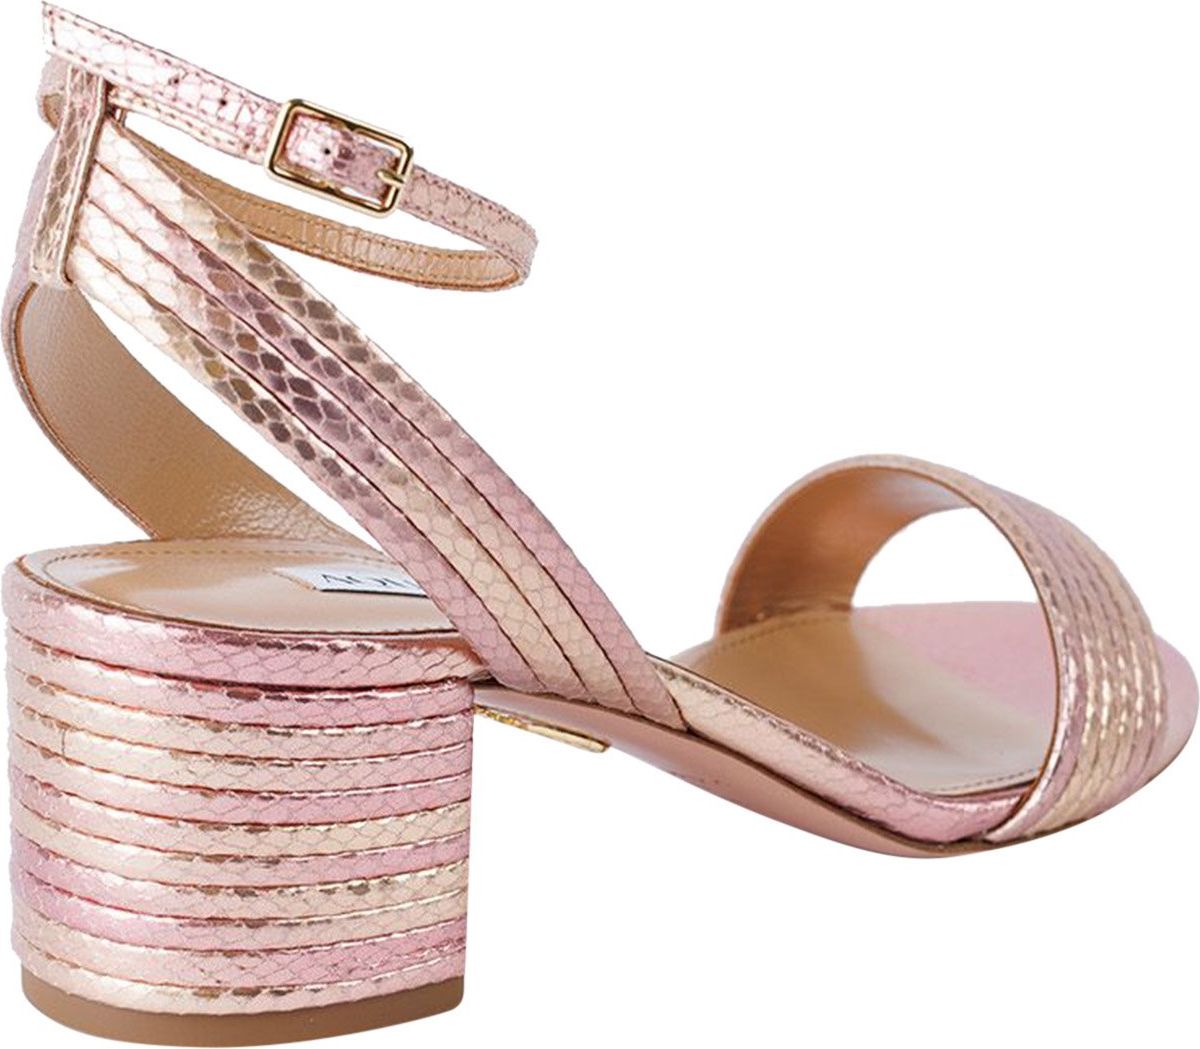 Aquazzura Sundance Sandals In Pale Pink Roze